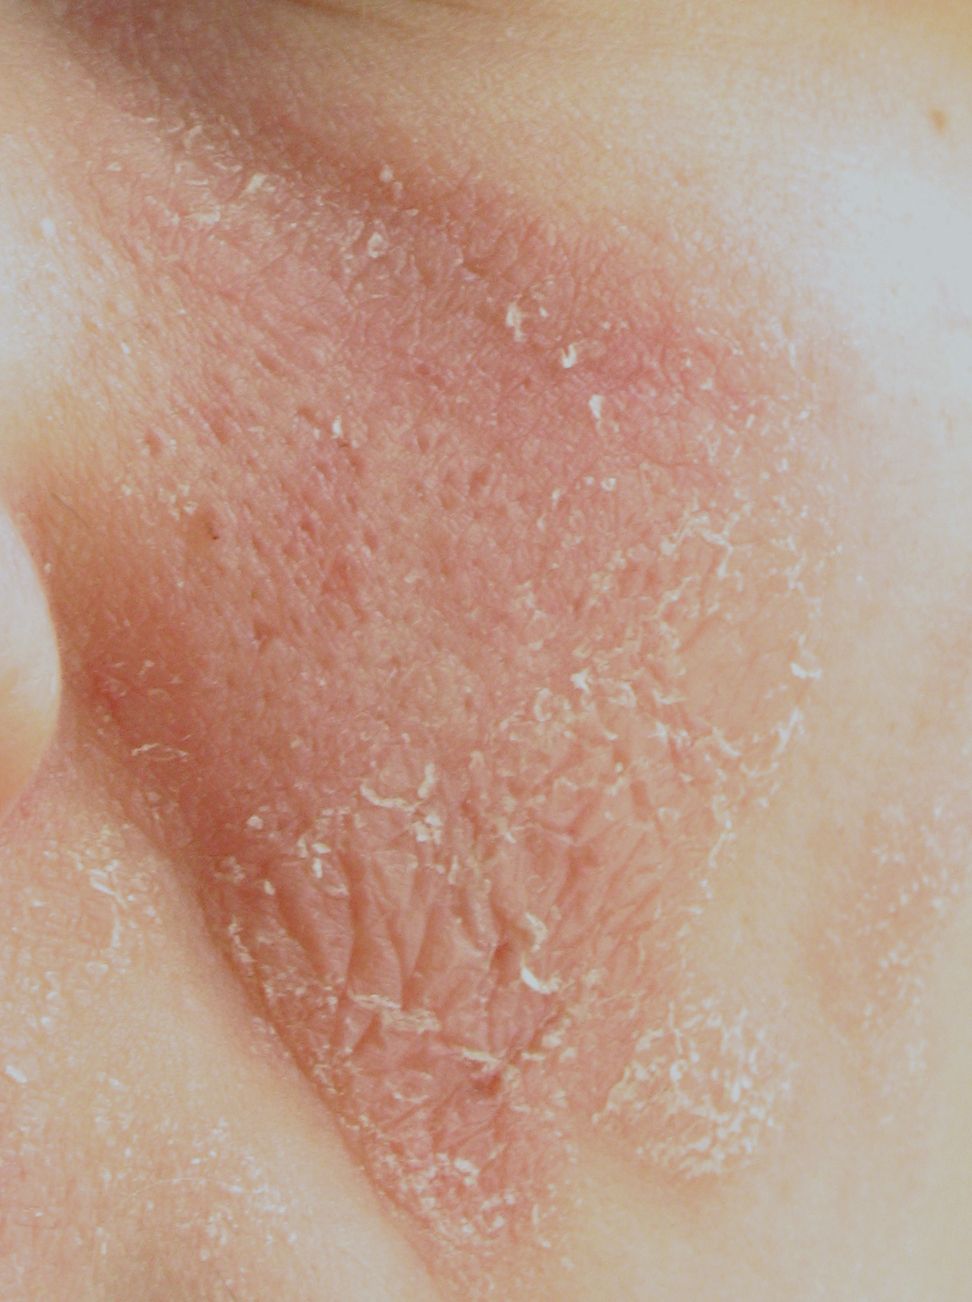 can antibiotics cause skin rash